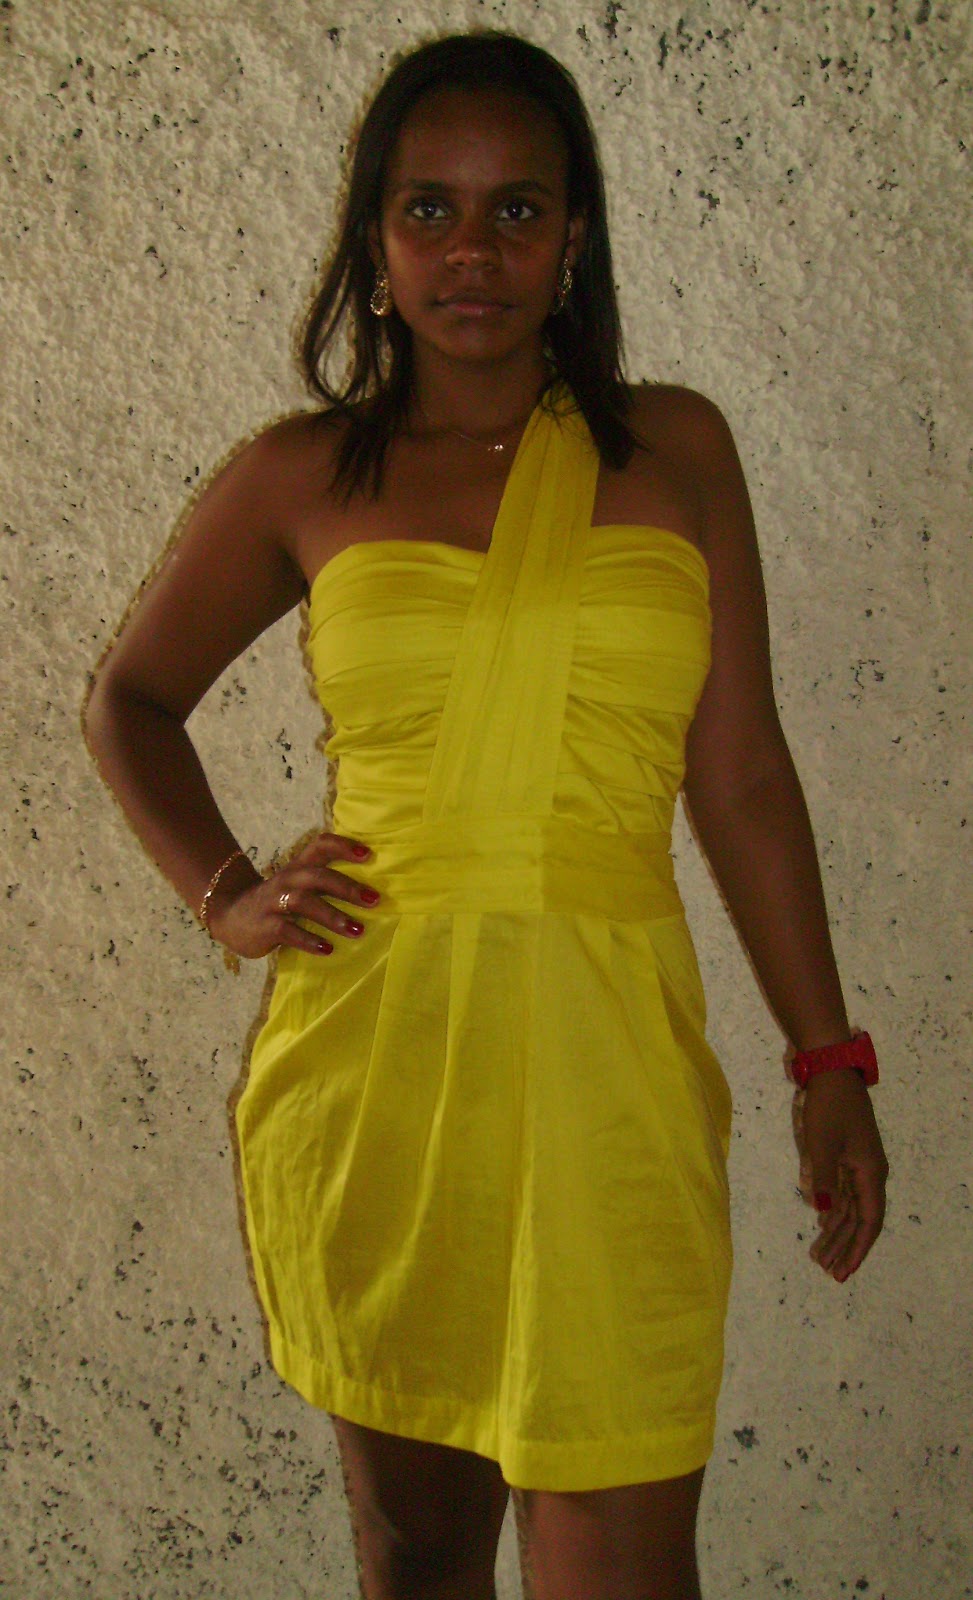 vestido amarelo reveillon